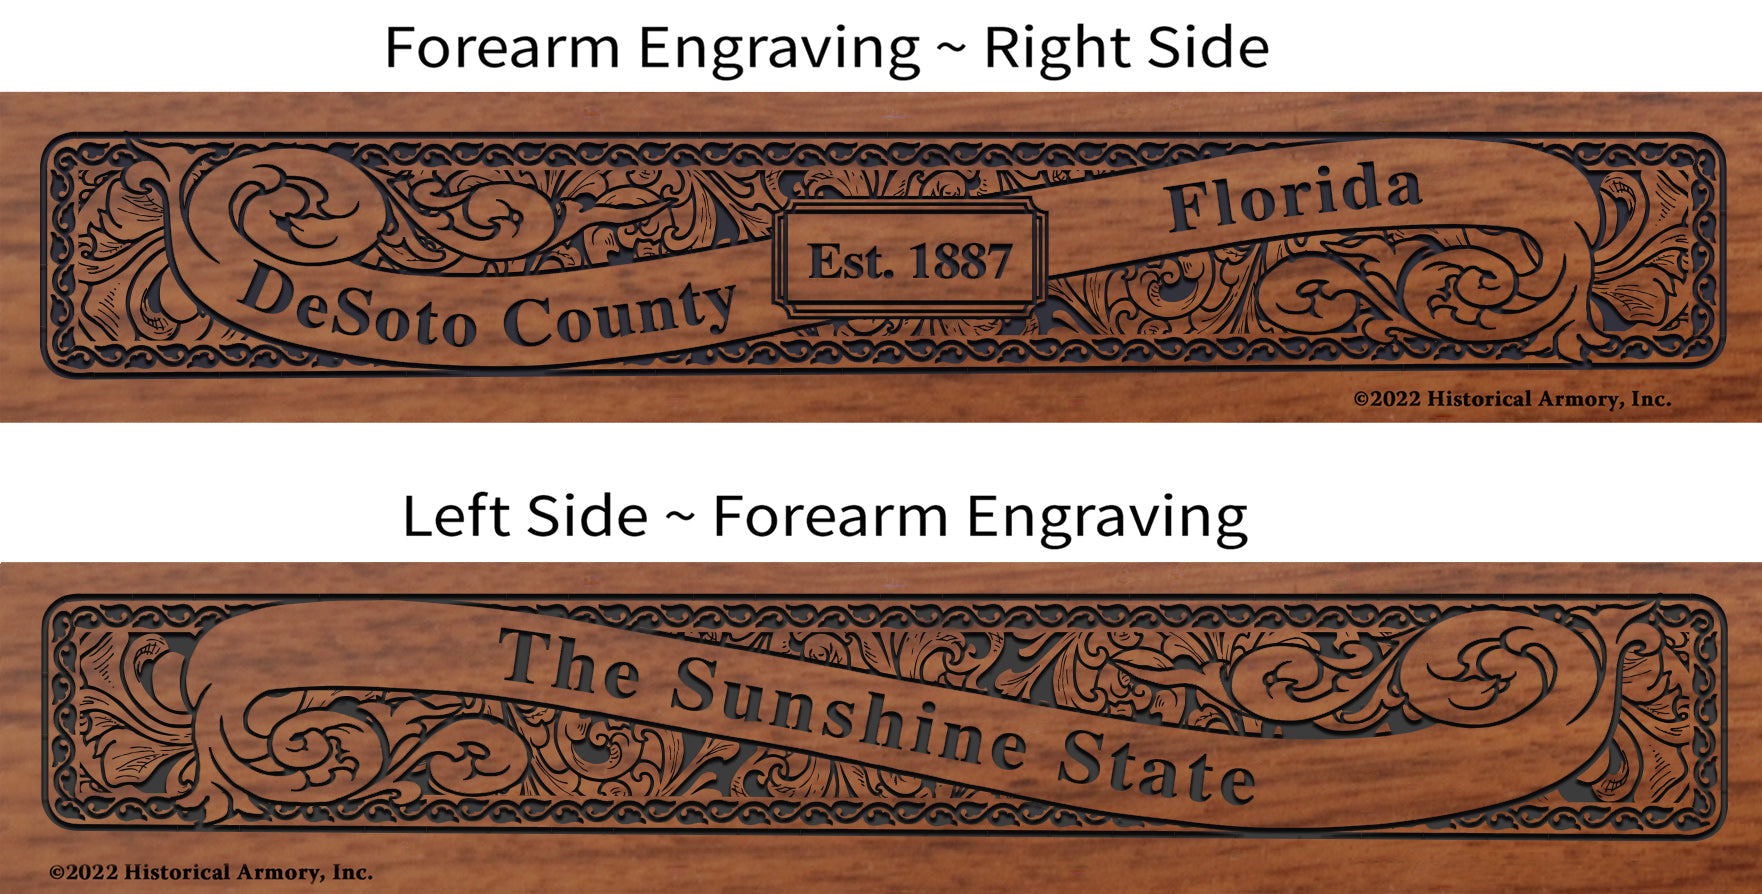 DeSoto County Florida Engraved Rifle Forearm